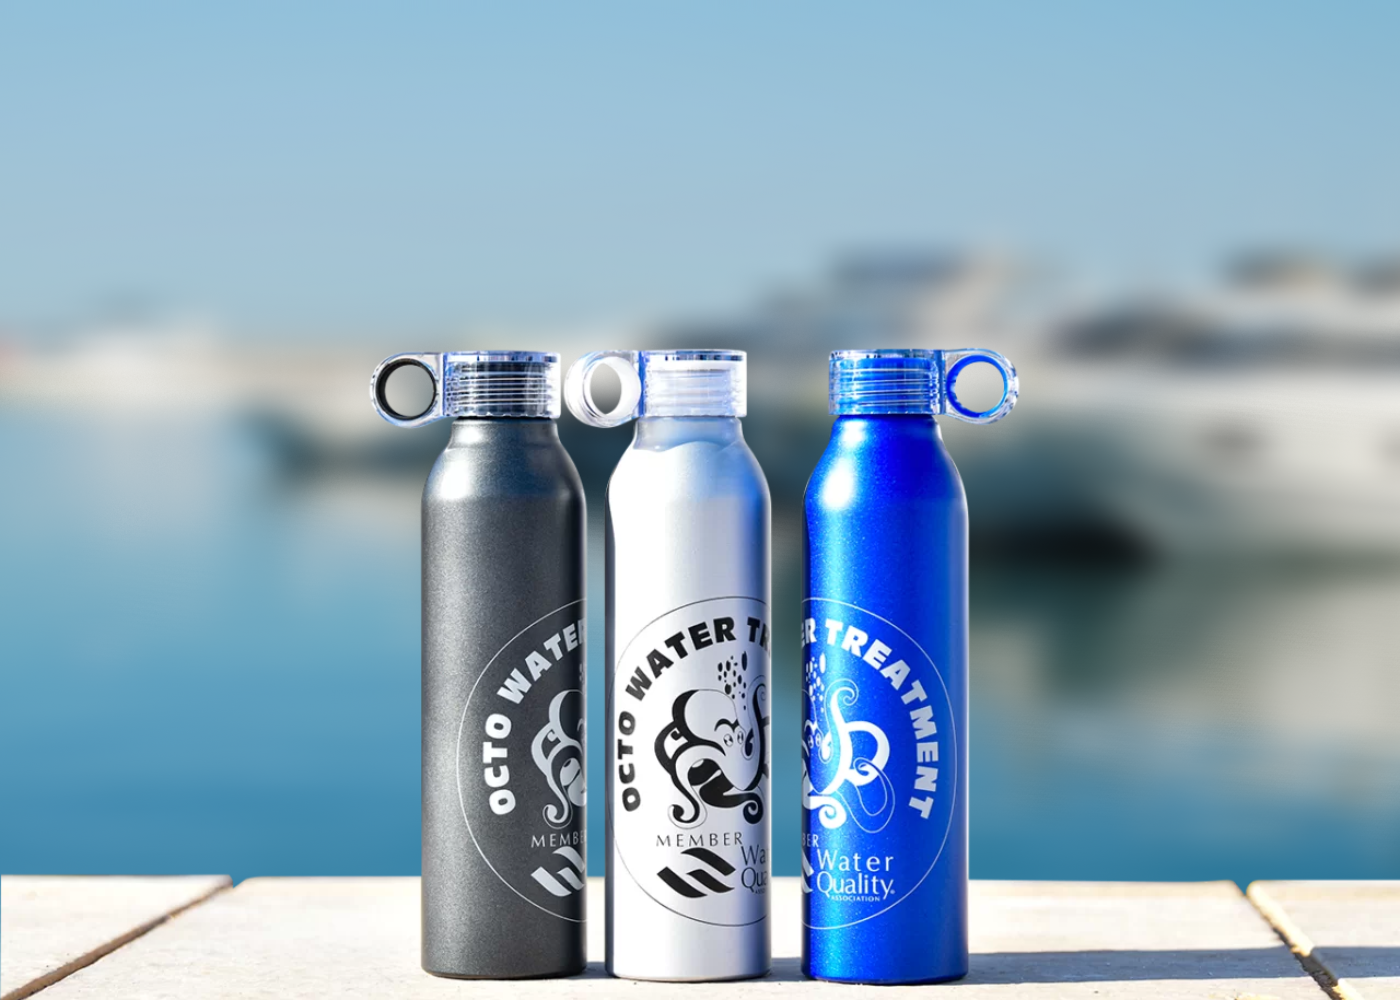 Octo Marine Brand Bottles On Dockside In Front Of Marina